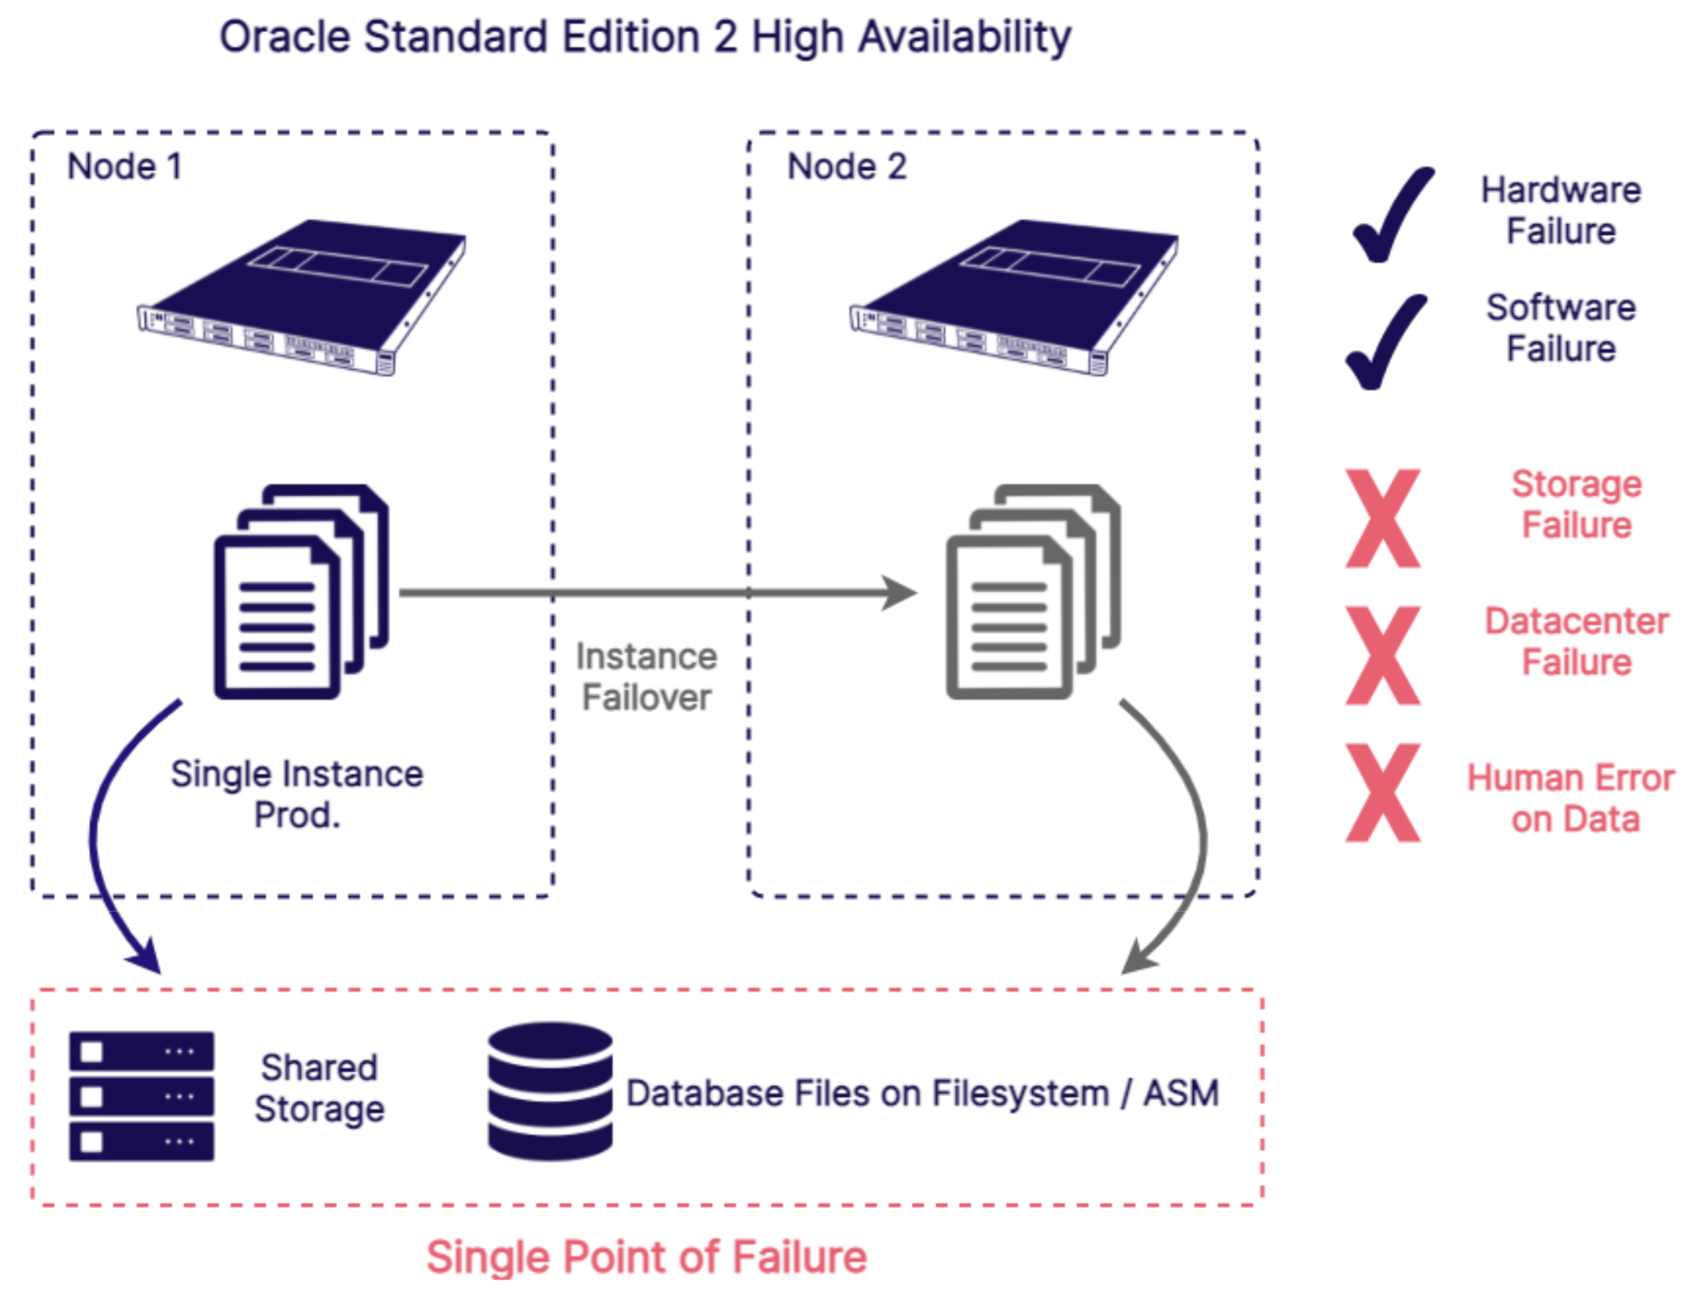 Oracle Standard Edition 2 High Availability - Failure Points